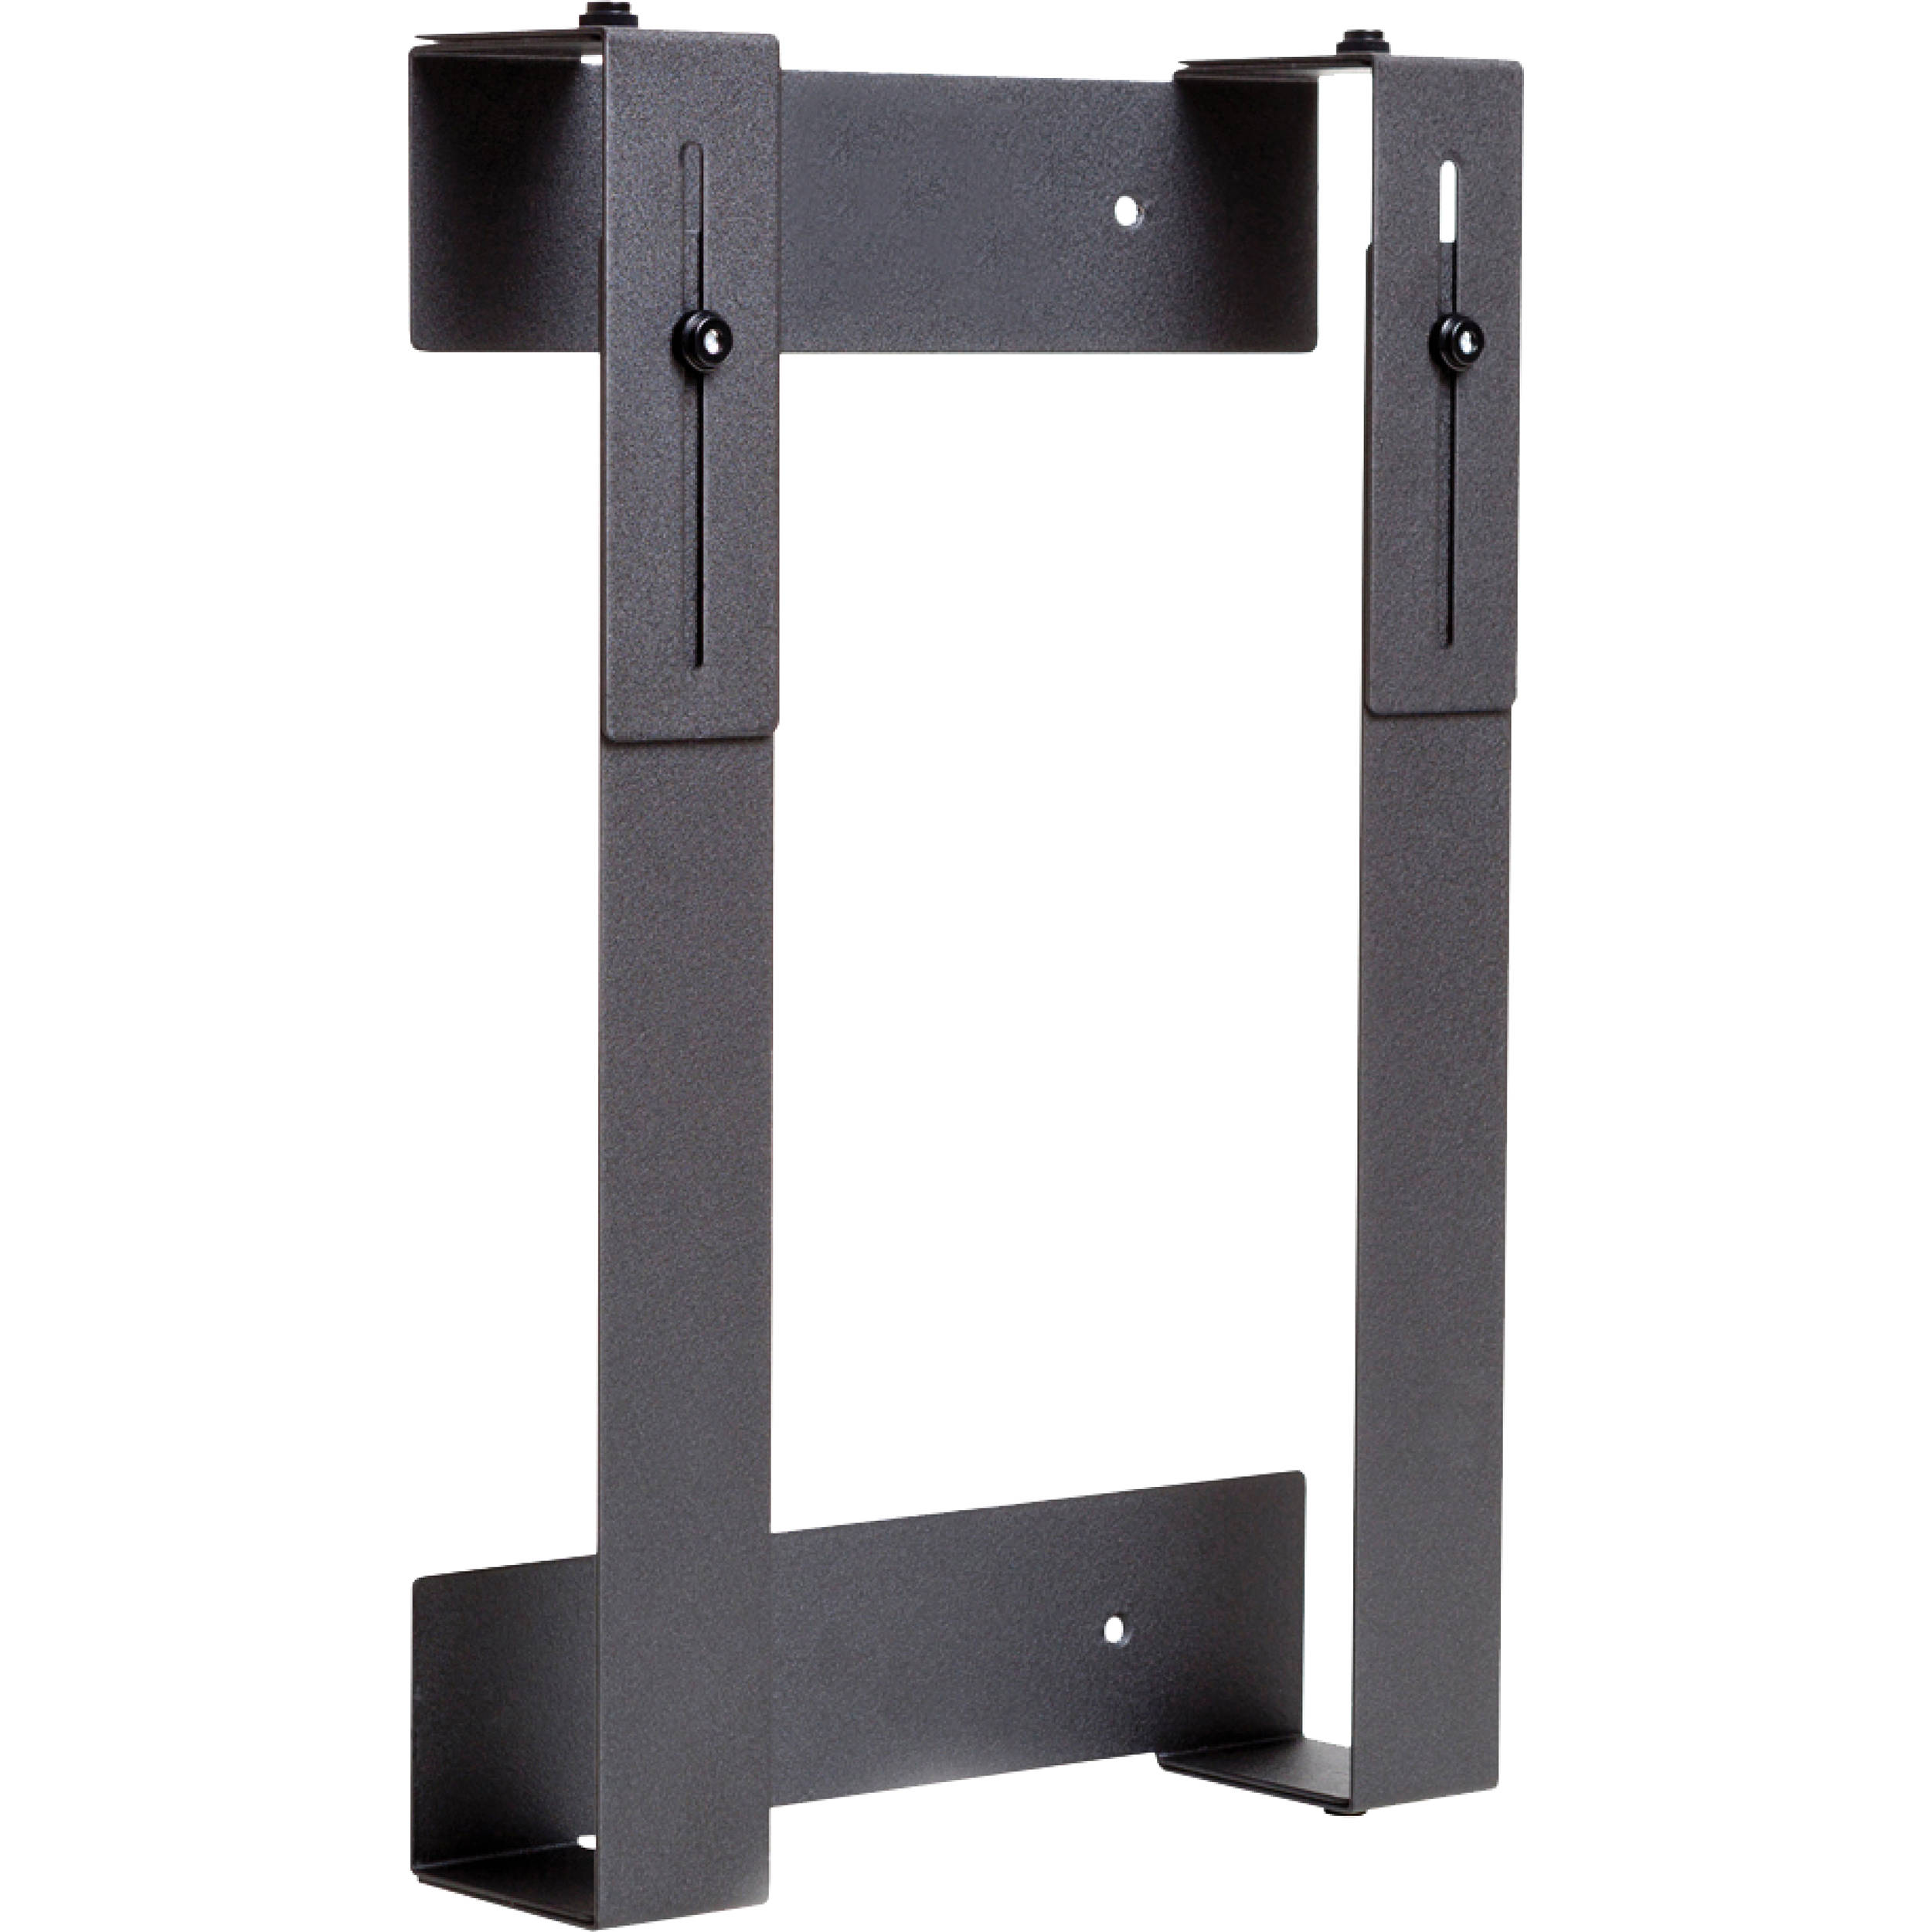 HIDEit Mounts Adjustable Wall Mount for Slim, Large Device (Black)